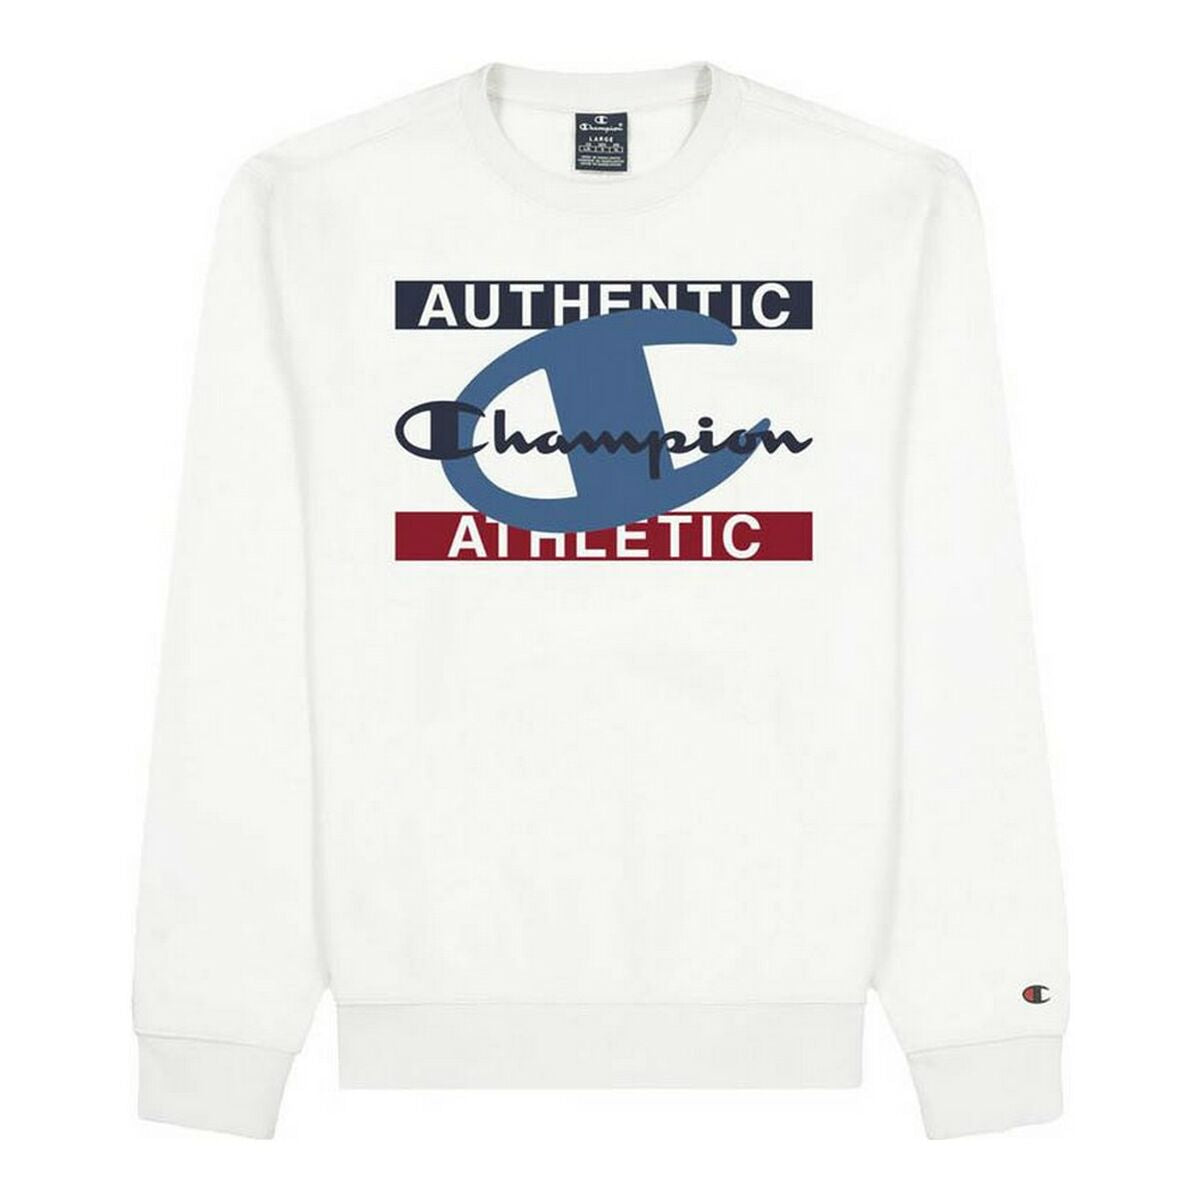 Kaufe Herren Sweater ohne Kapuze Champion Authentic Athletic Weiß bei AWK Flagship um € 51.00